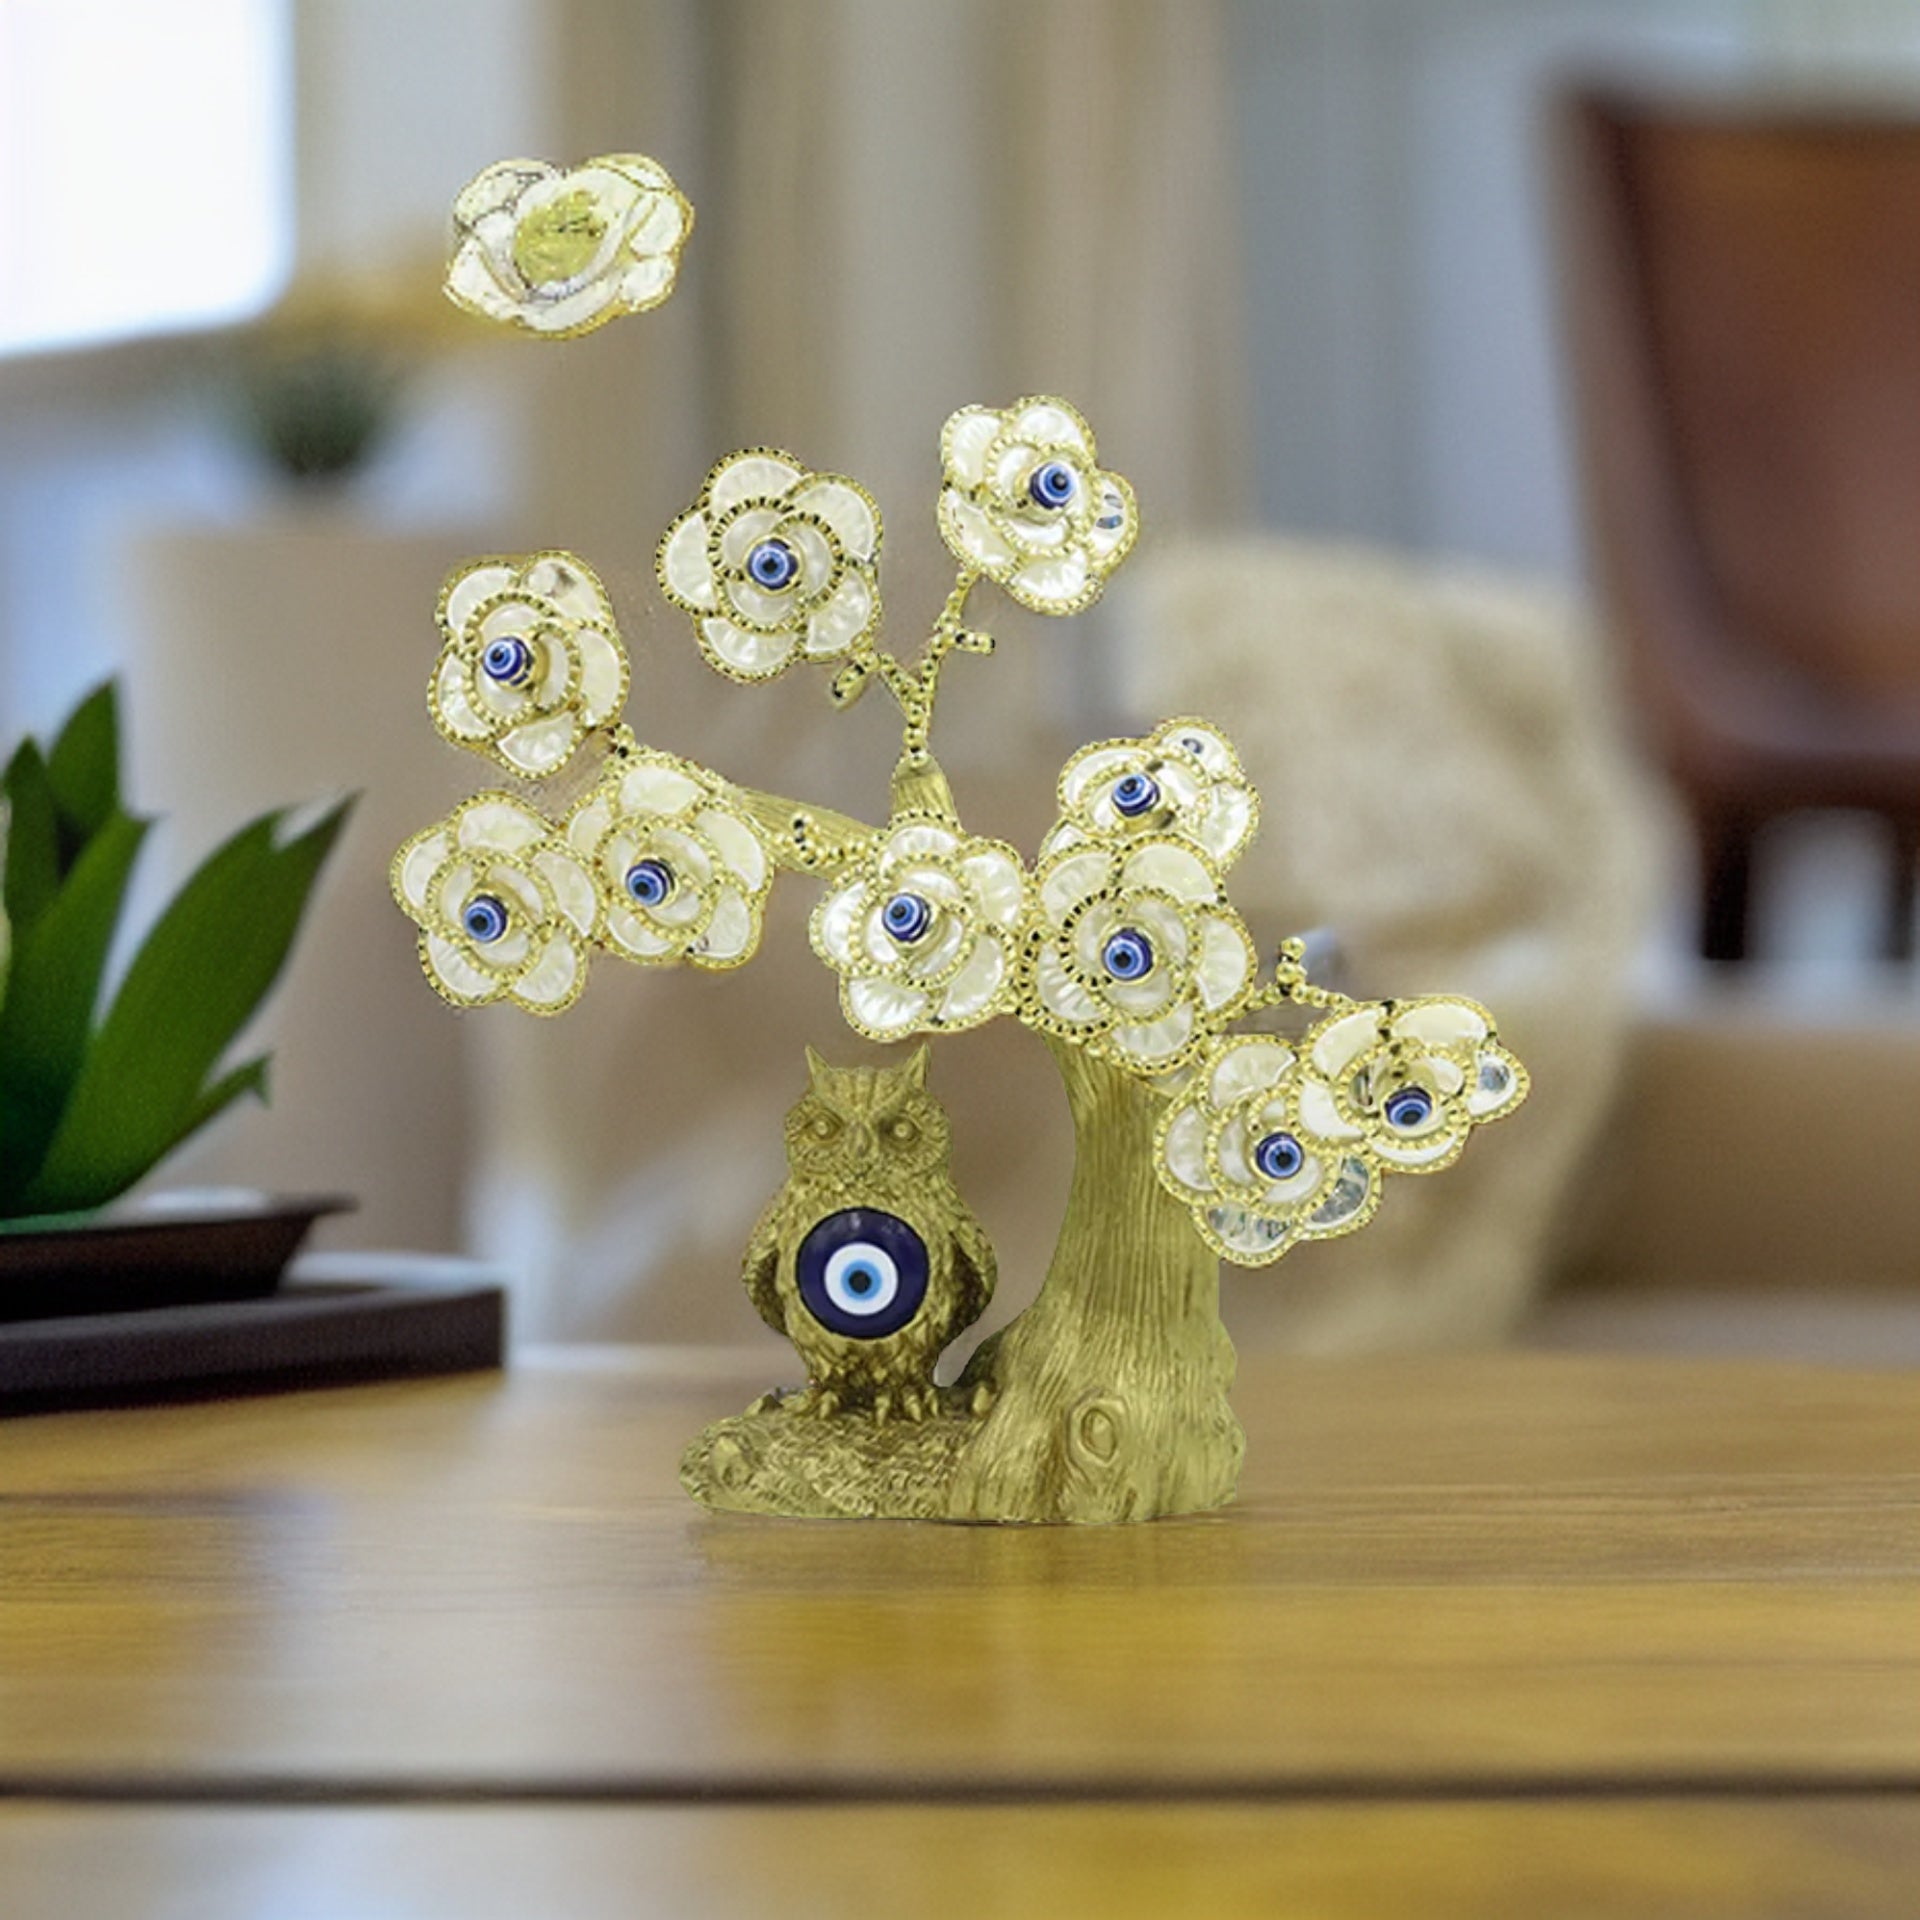 Evil Eye Tree With Golden Owl Desktop Ornament